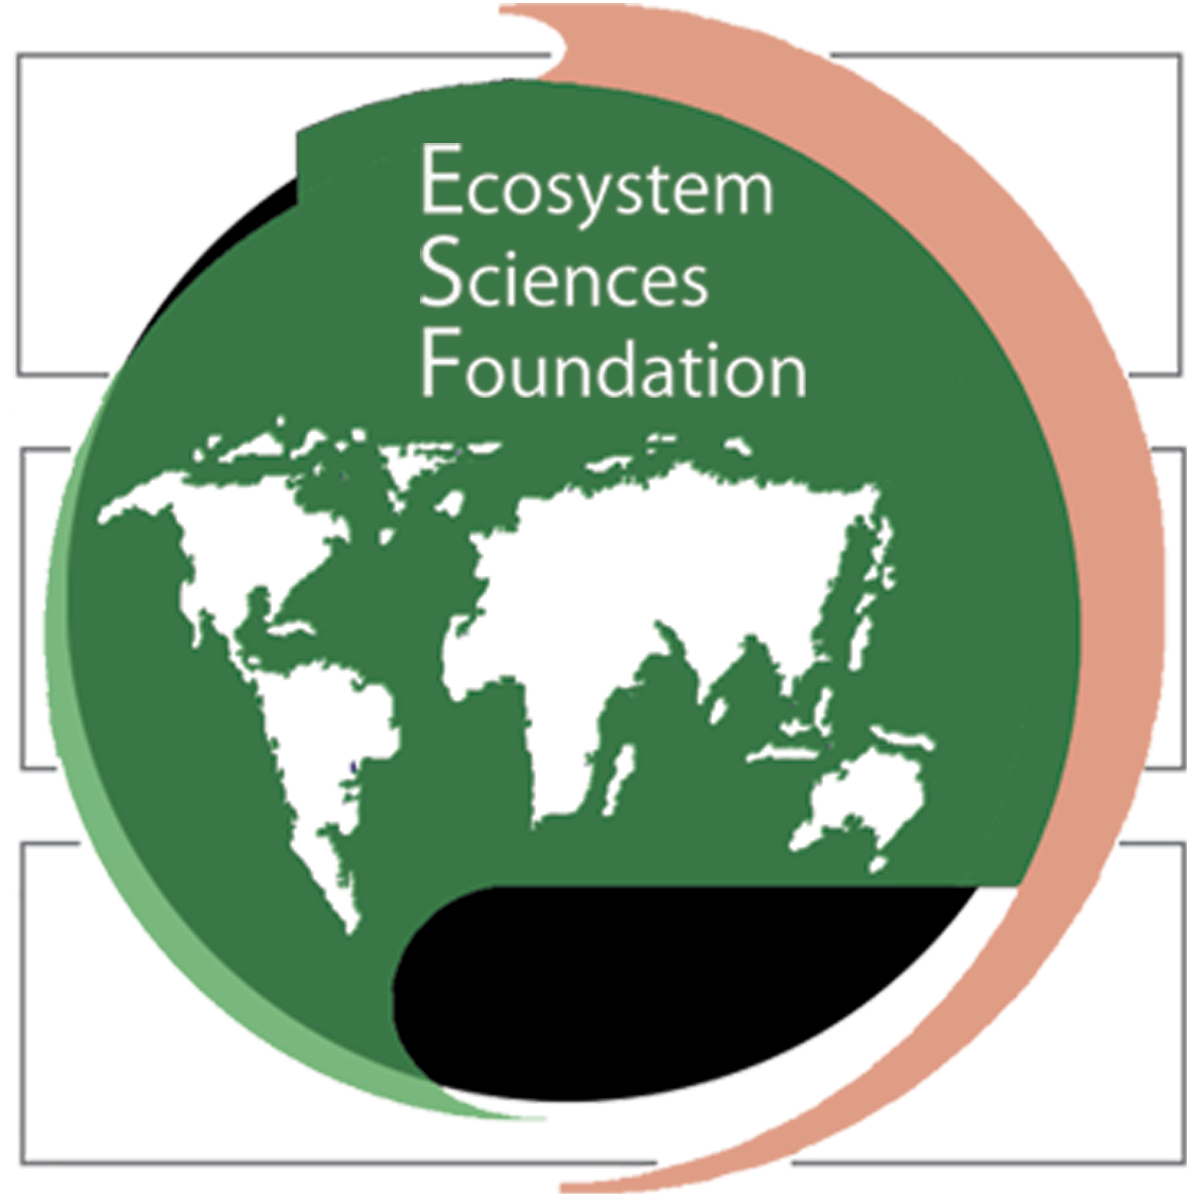 Ecosystem sciences foundation